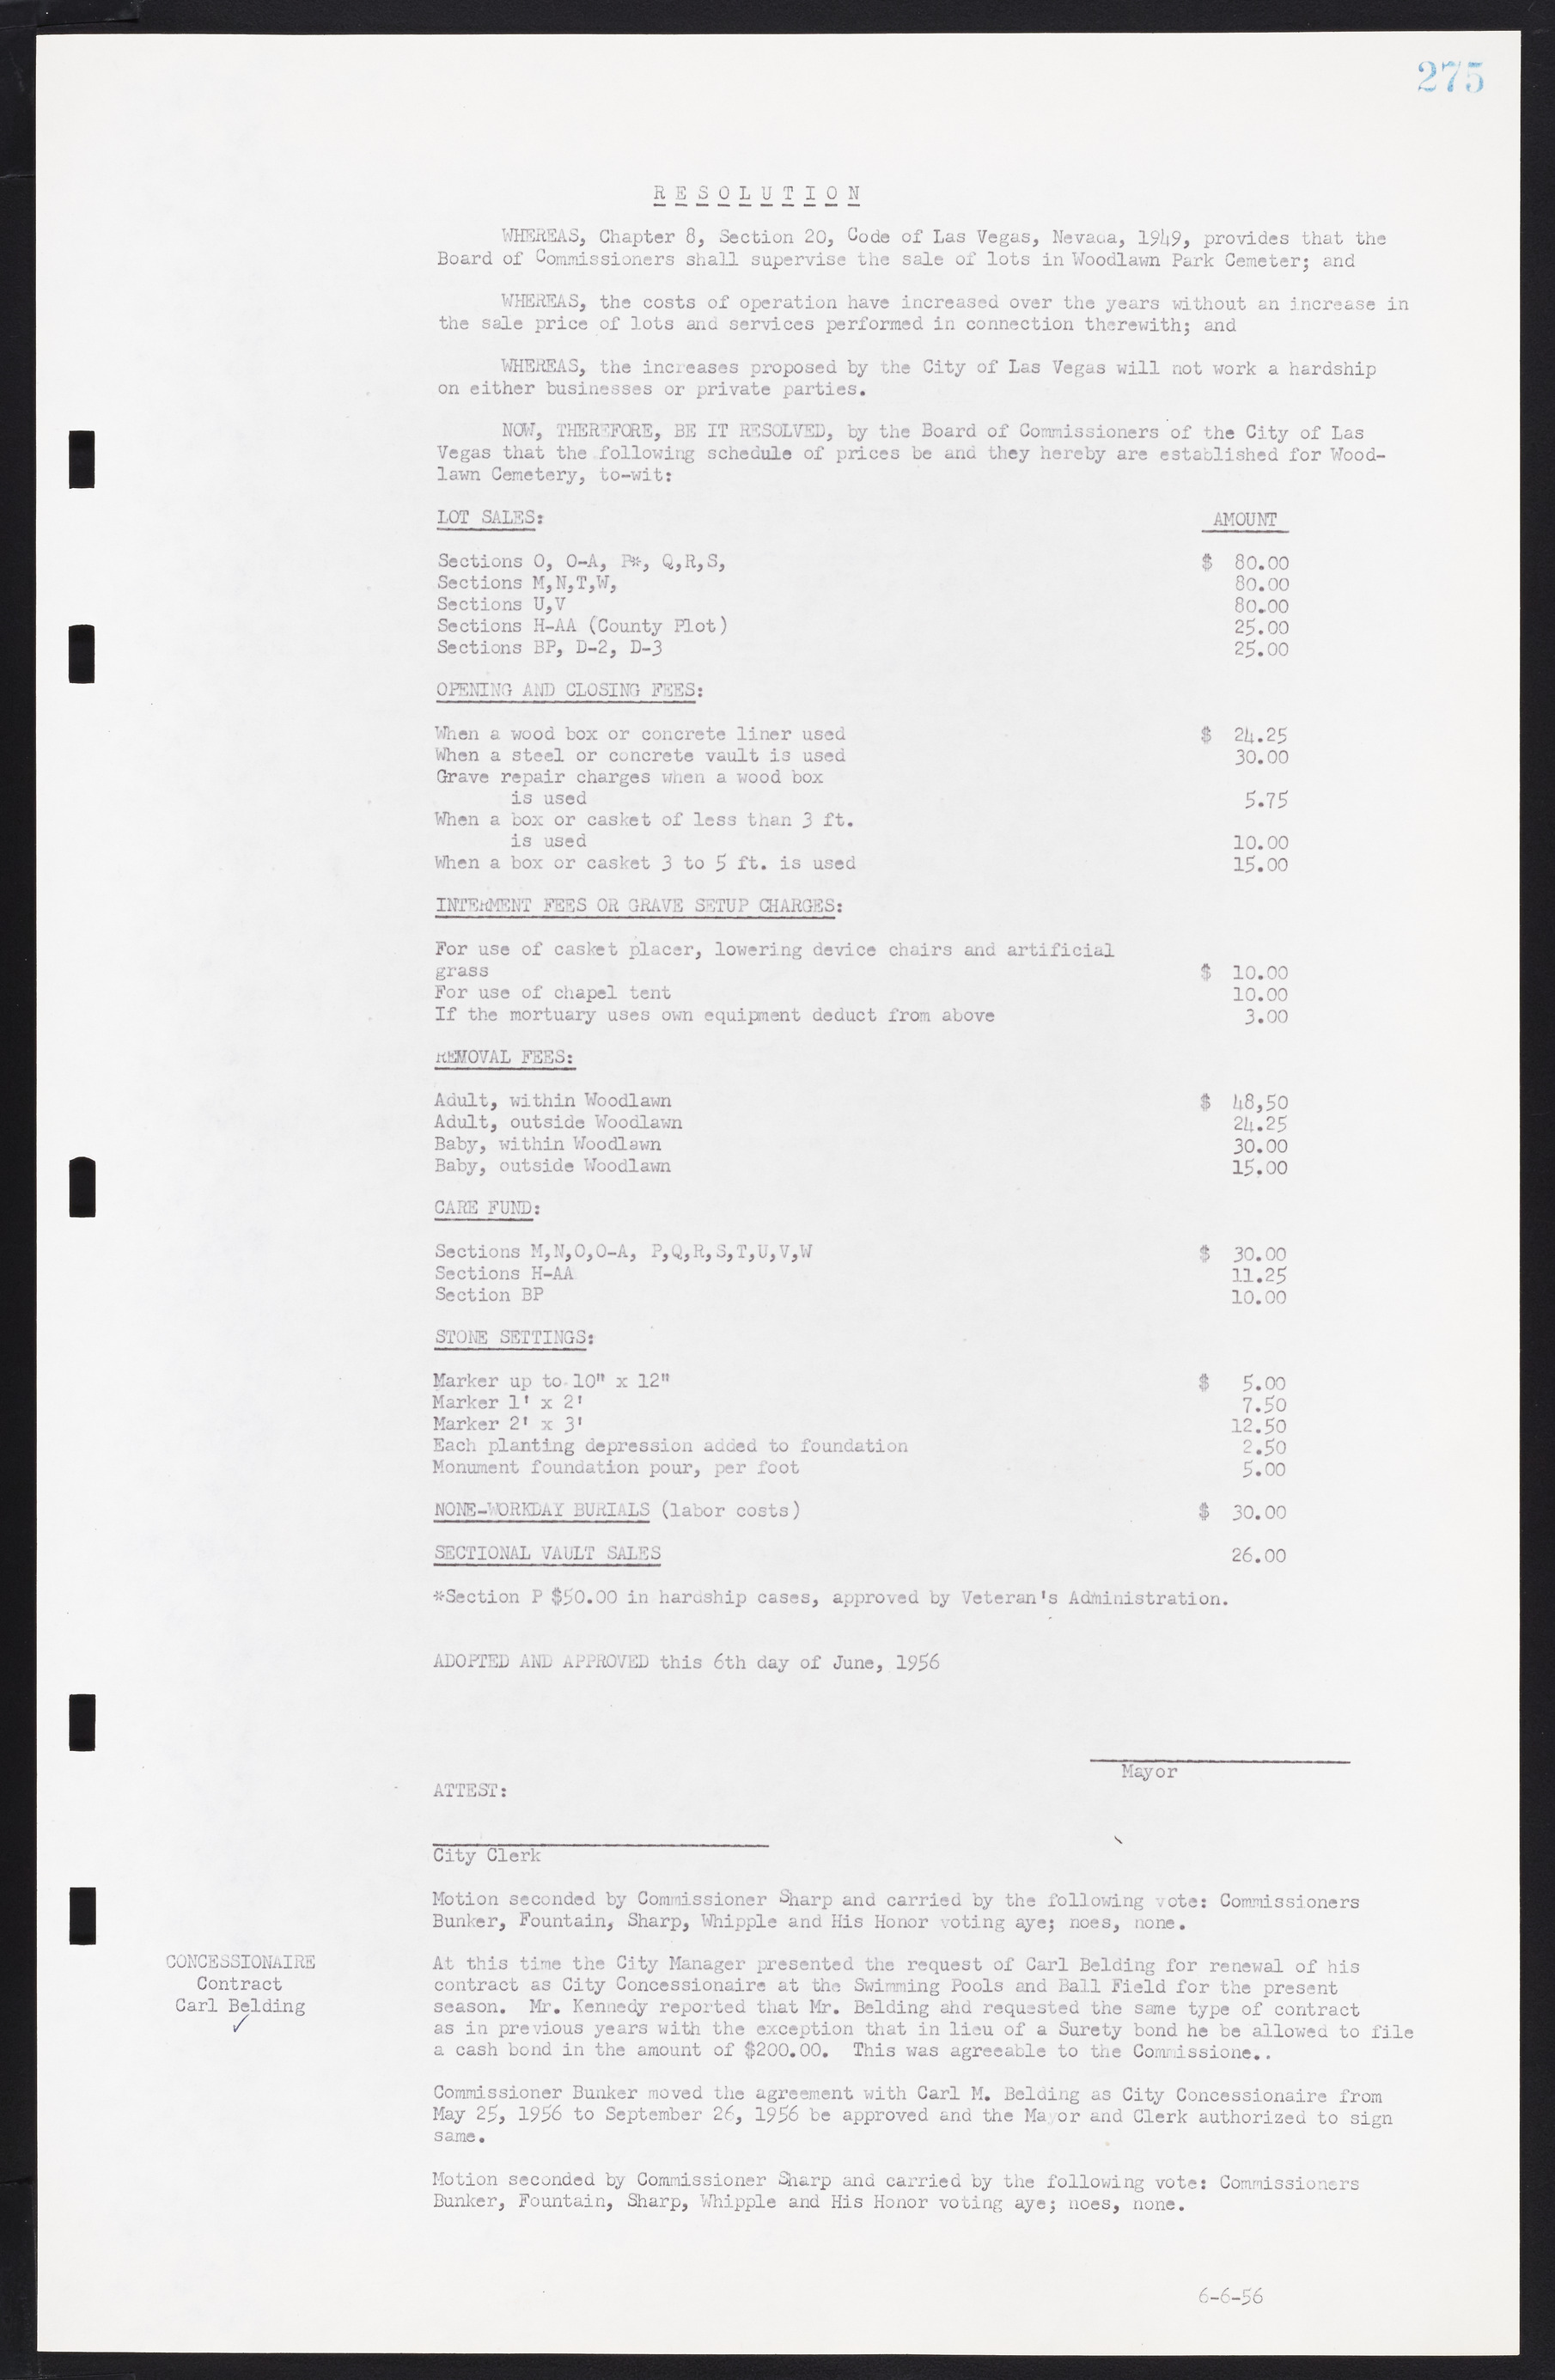 Las Vegas City Commission Minutes, September 21, 1955 to November 20, 1957, lvc000010-295